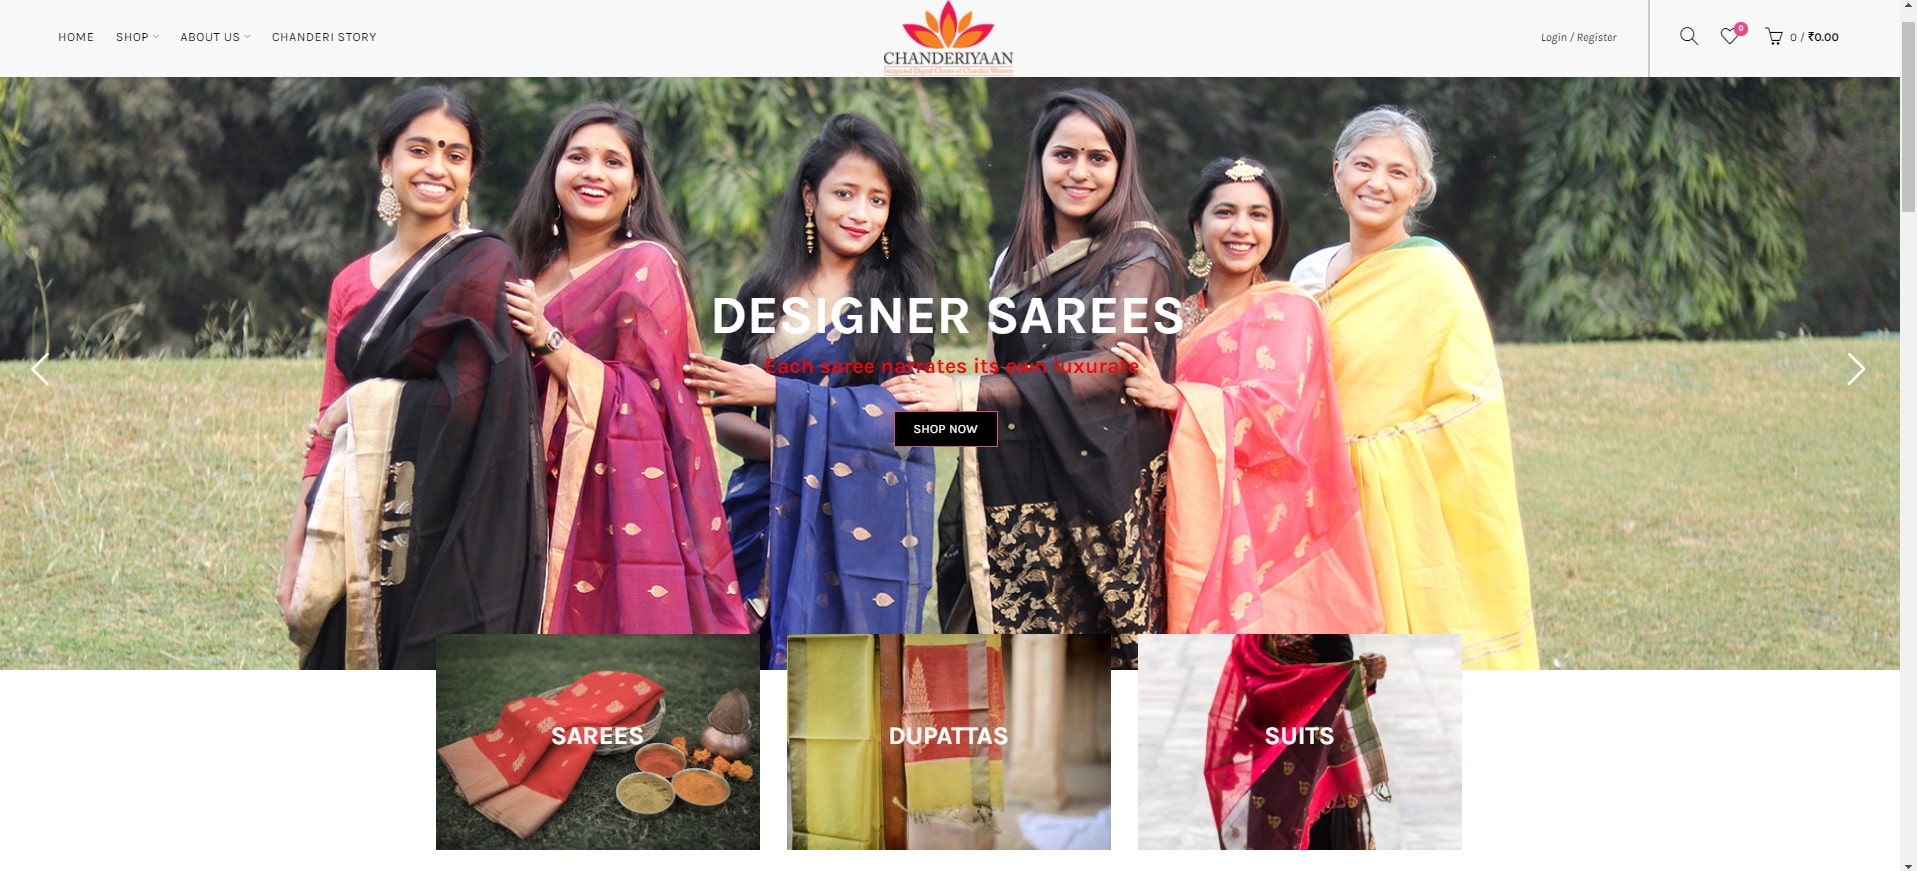 Seis mujeres en saris